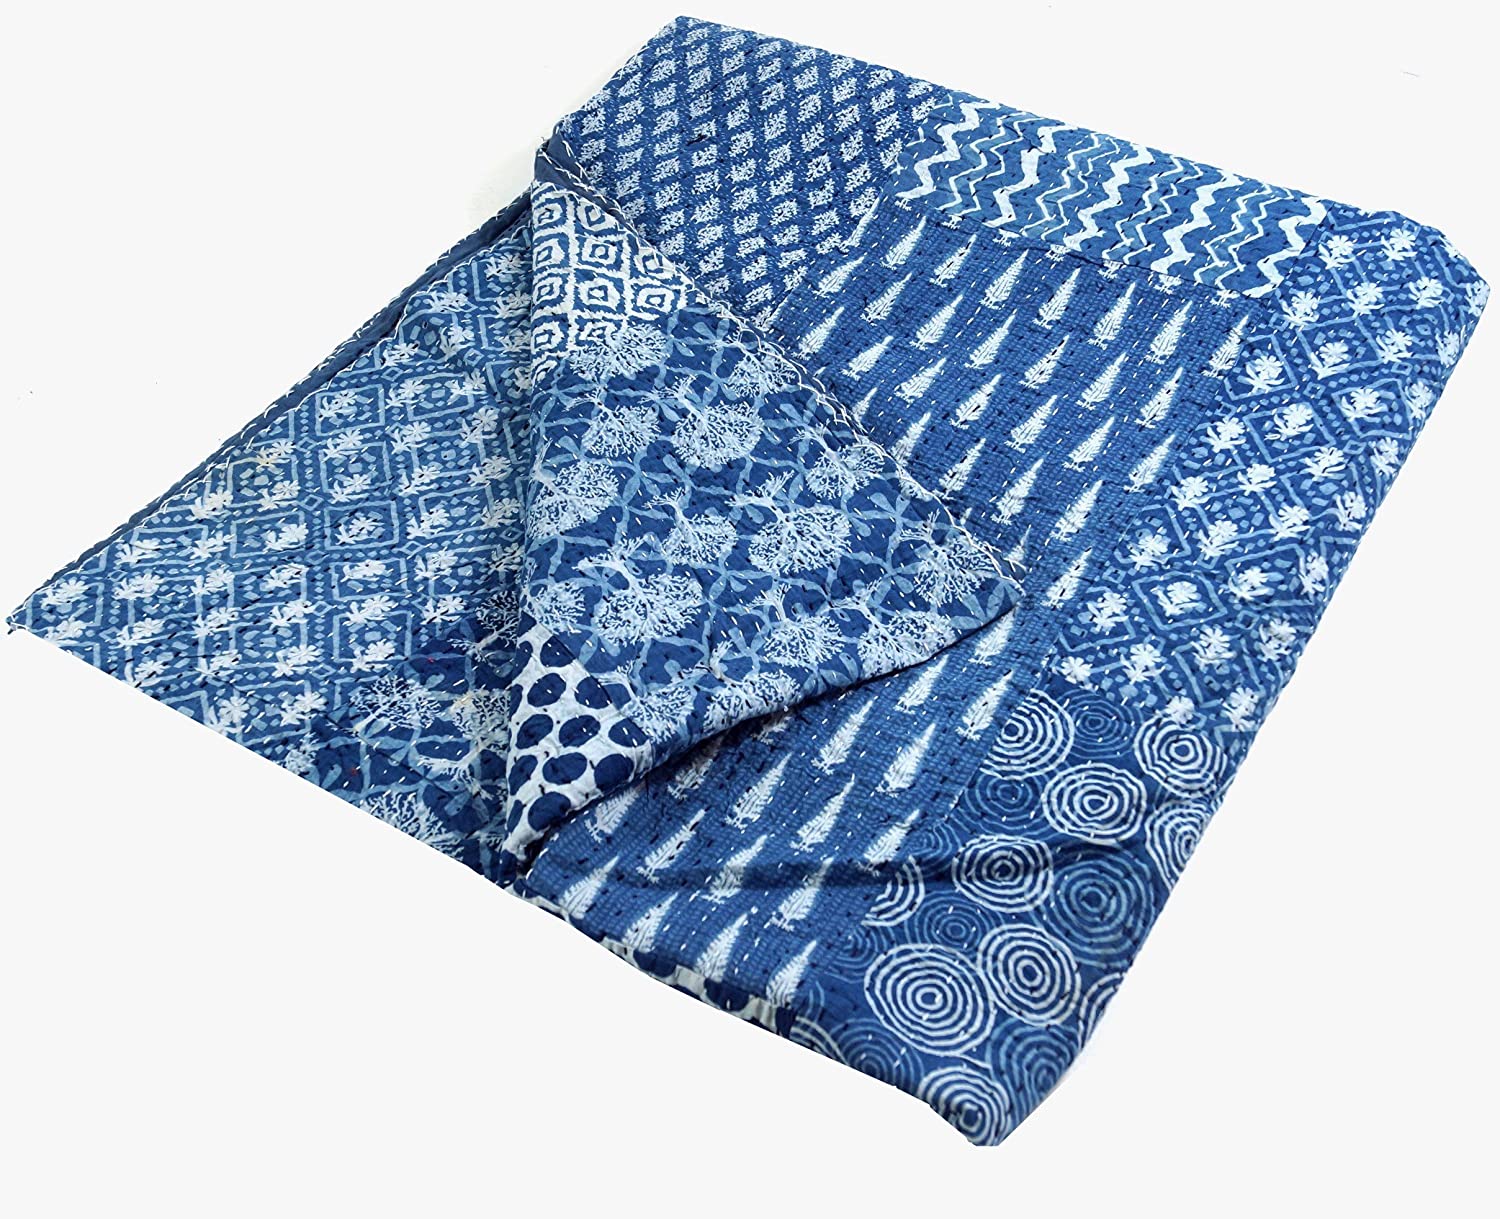 Guru-Shop, Quilt, Bedspread, Bedspread, Bed Throw, Embroidered Cloth, India